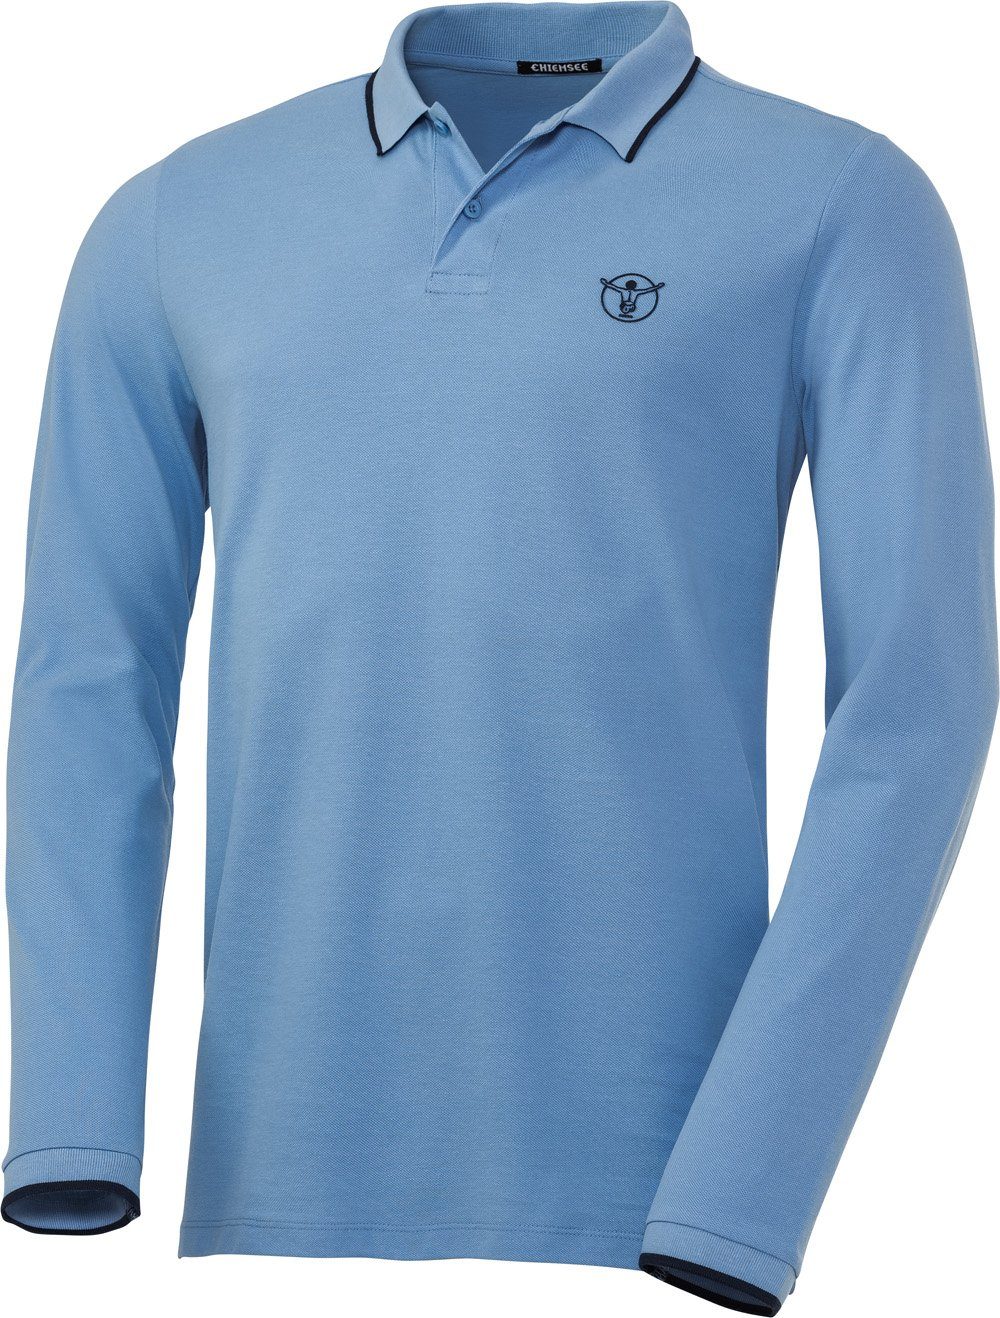 Chiemsee Langarm-Poloshirt aus formstabilem Baumwoll-Piqué hellblau